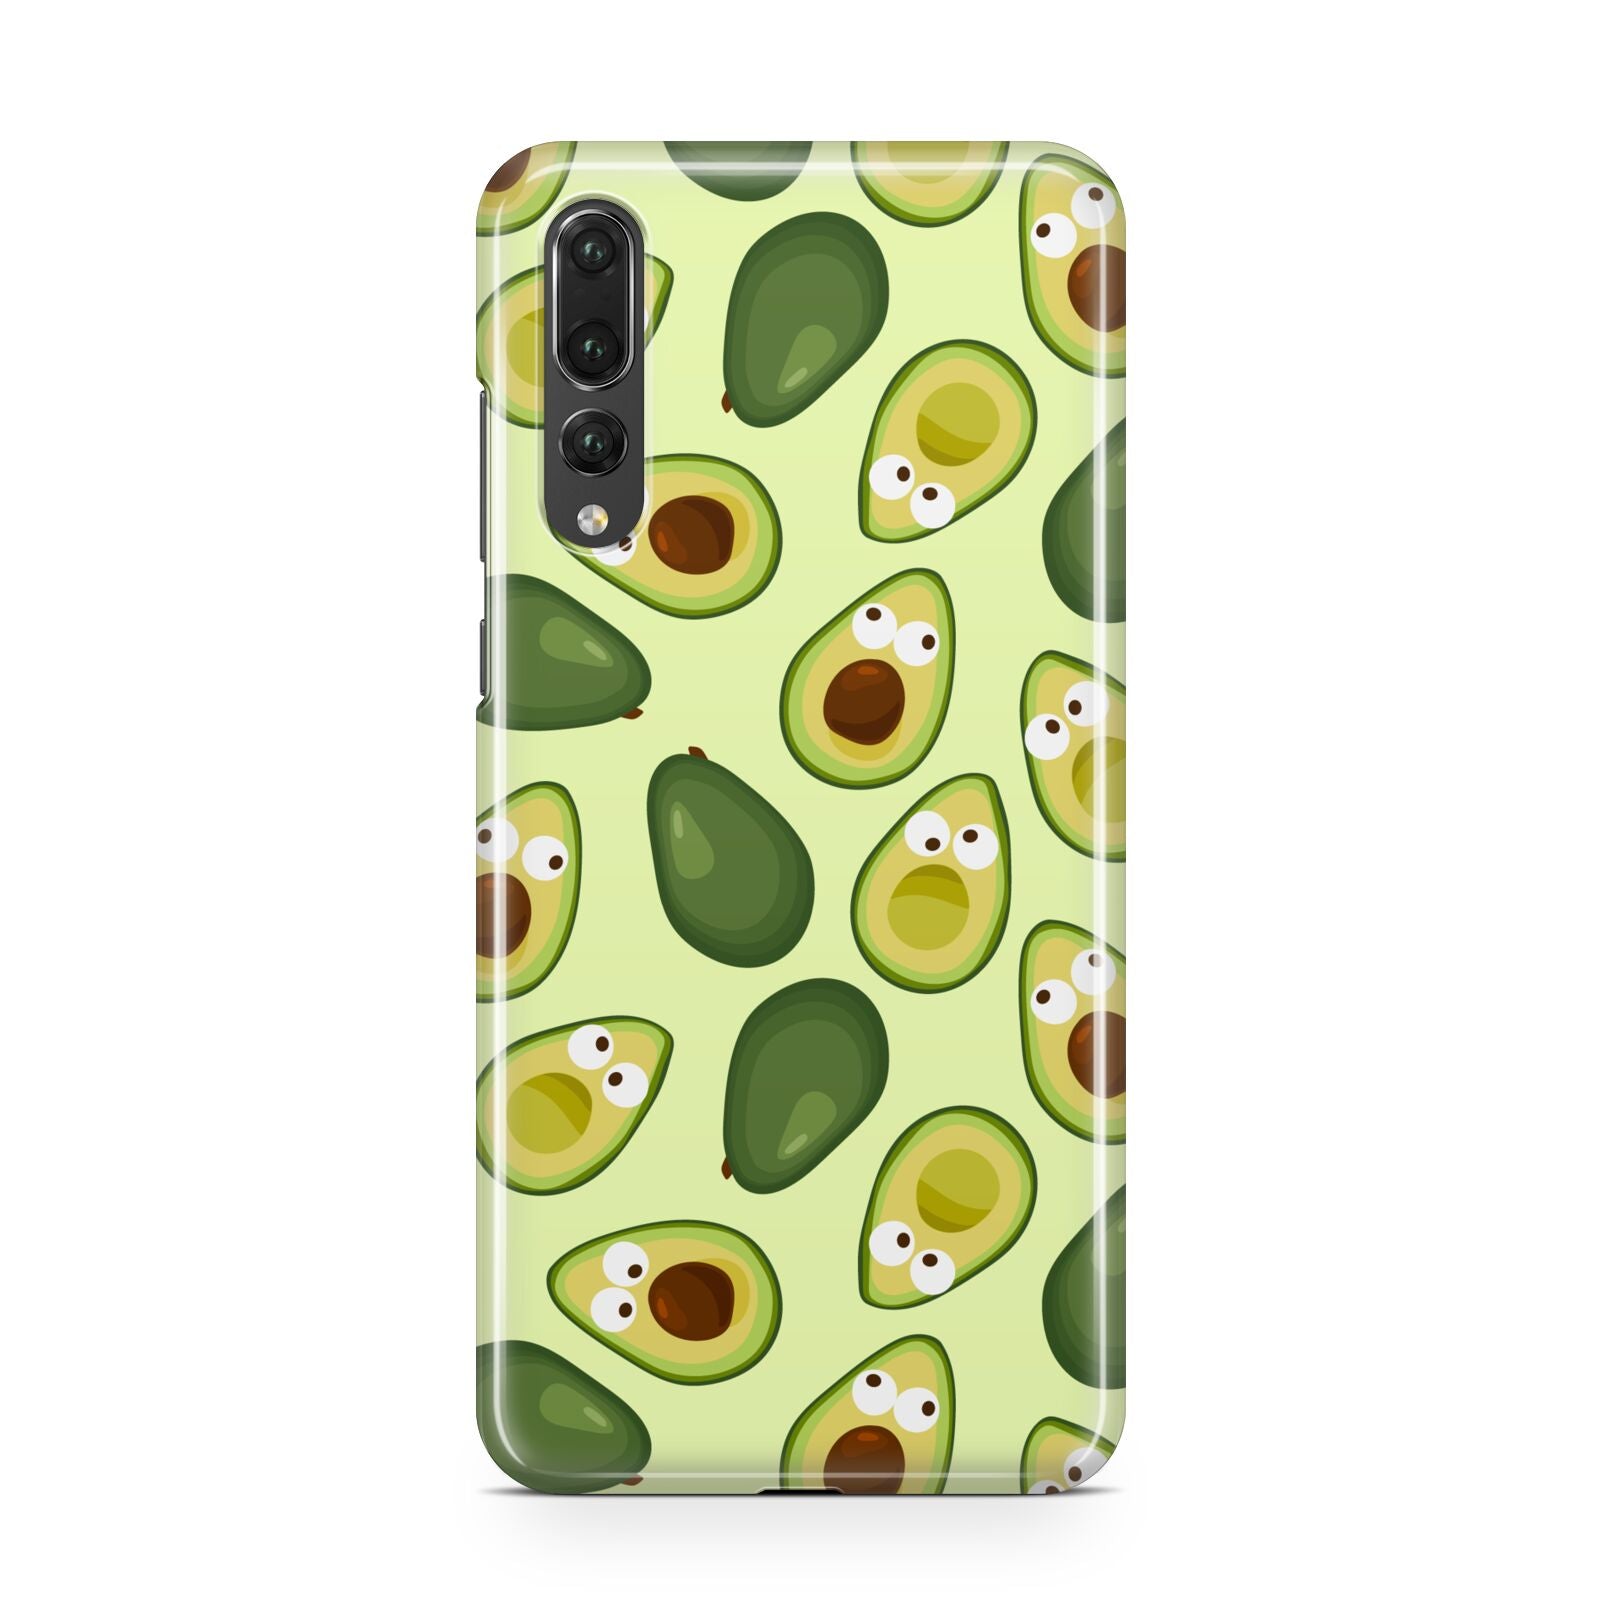 Avocado Huawei P20 Pro Phone Case